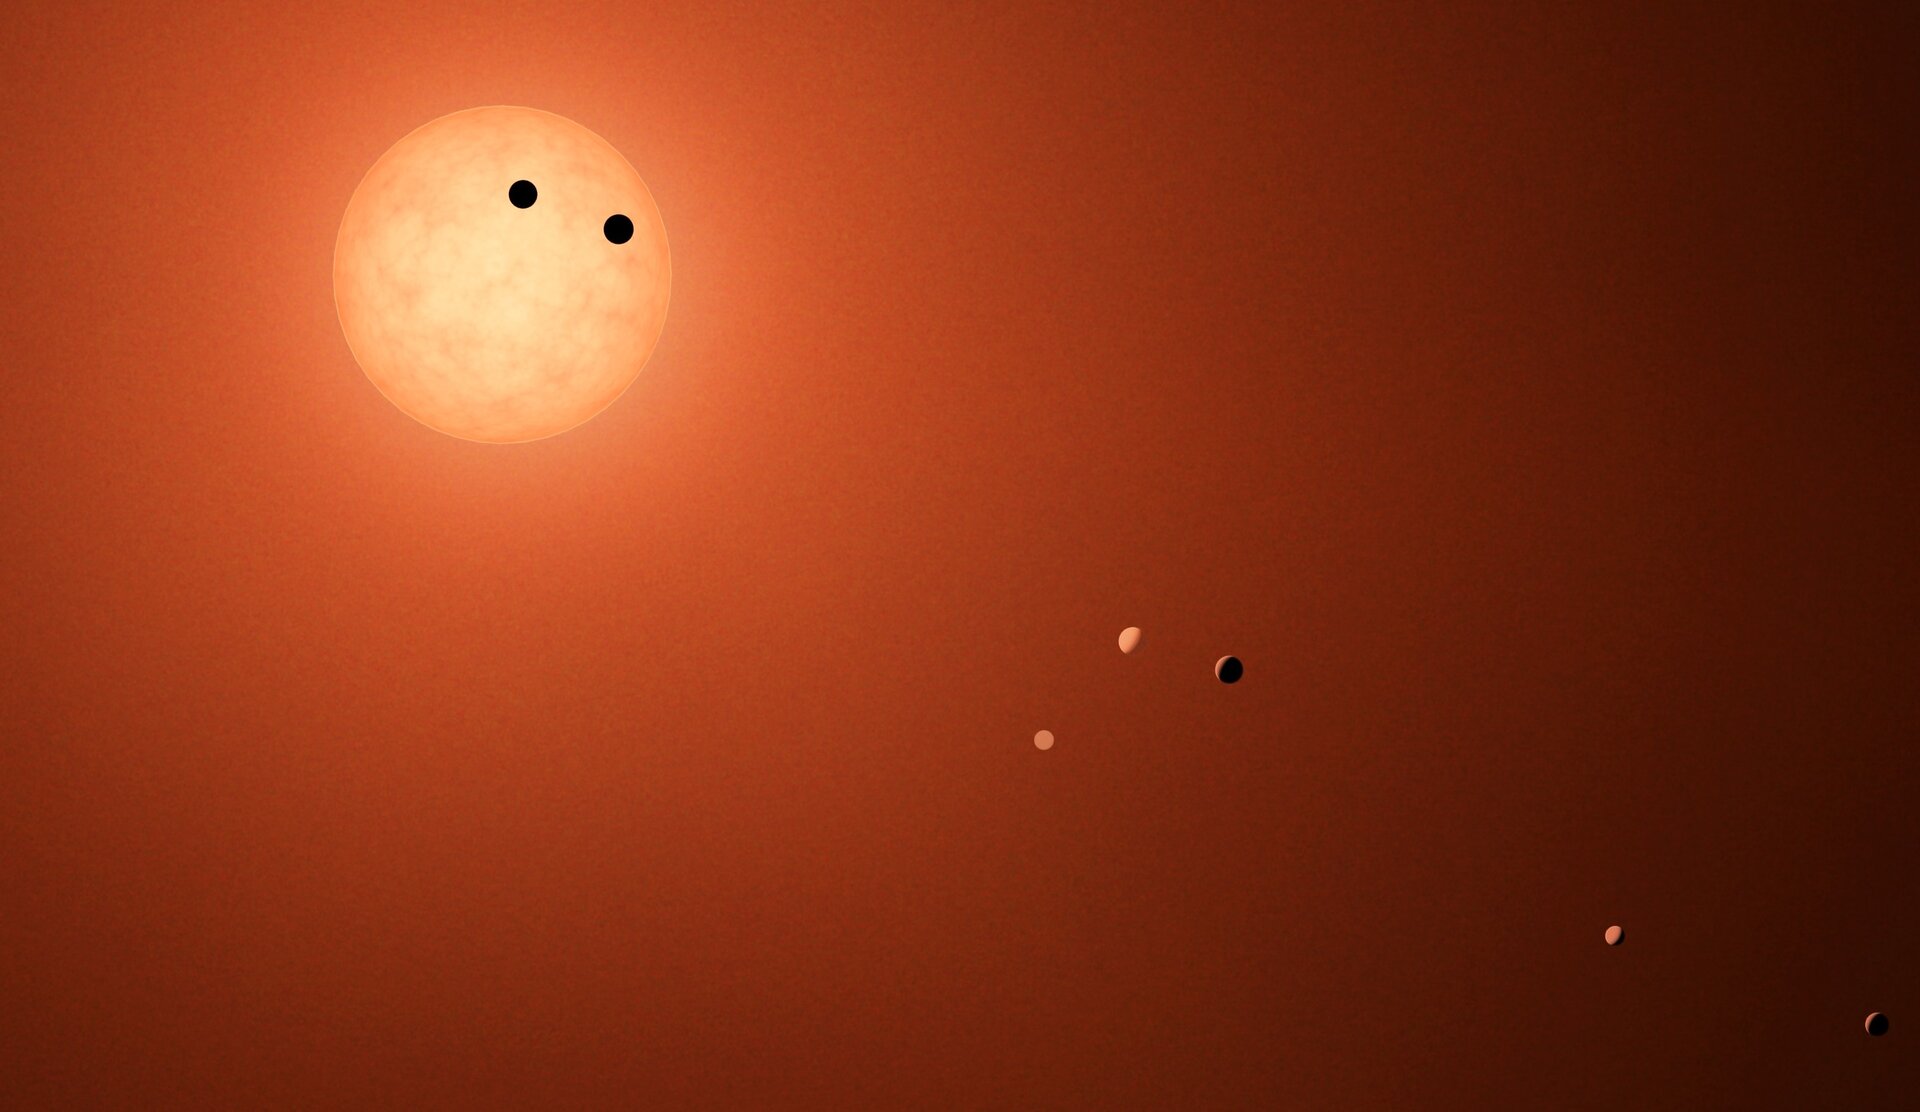 TRAPPIST-1 star system